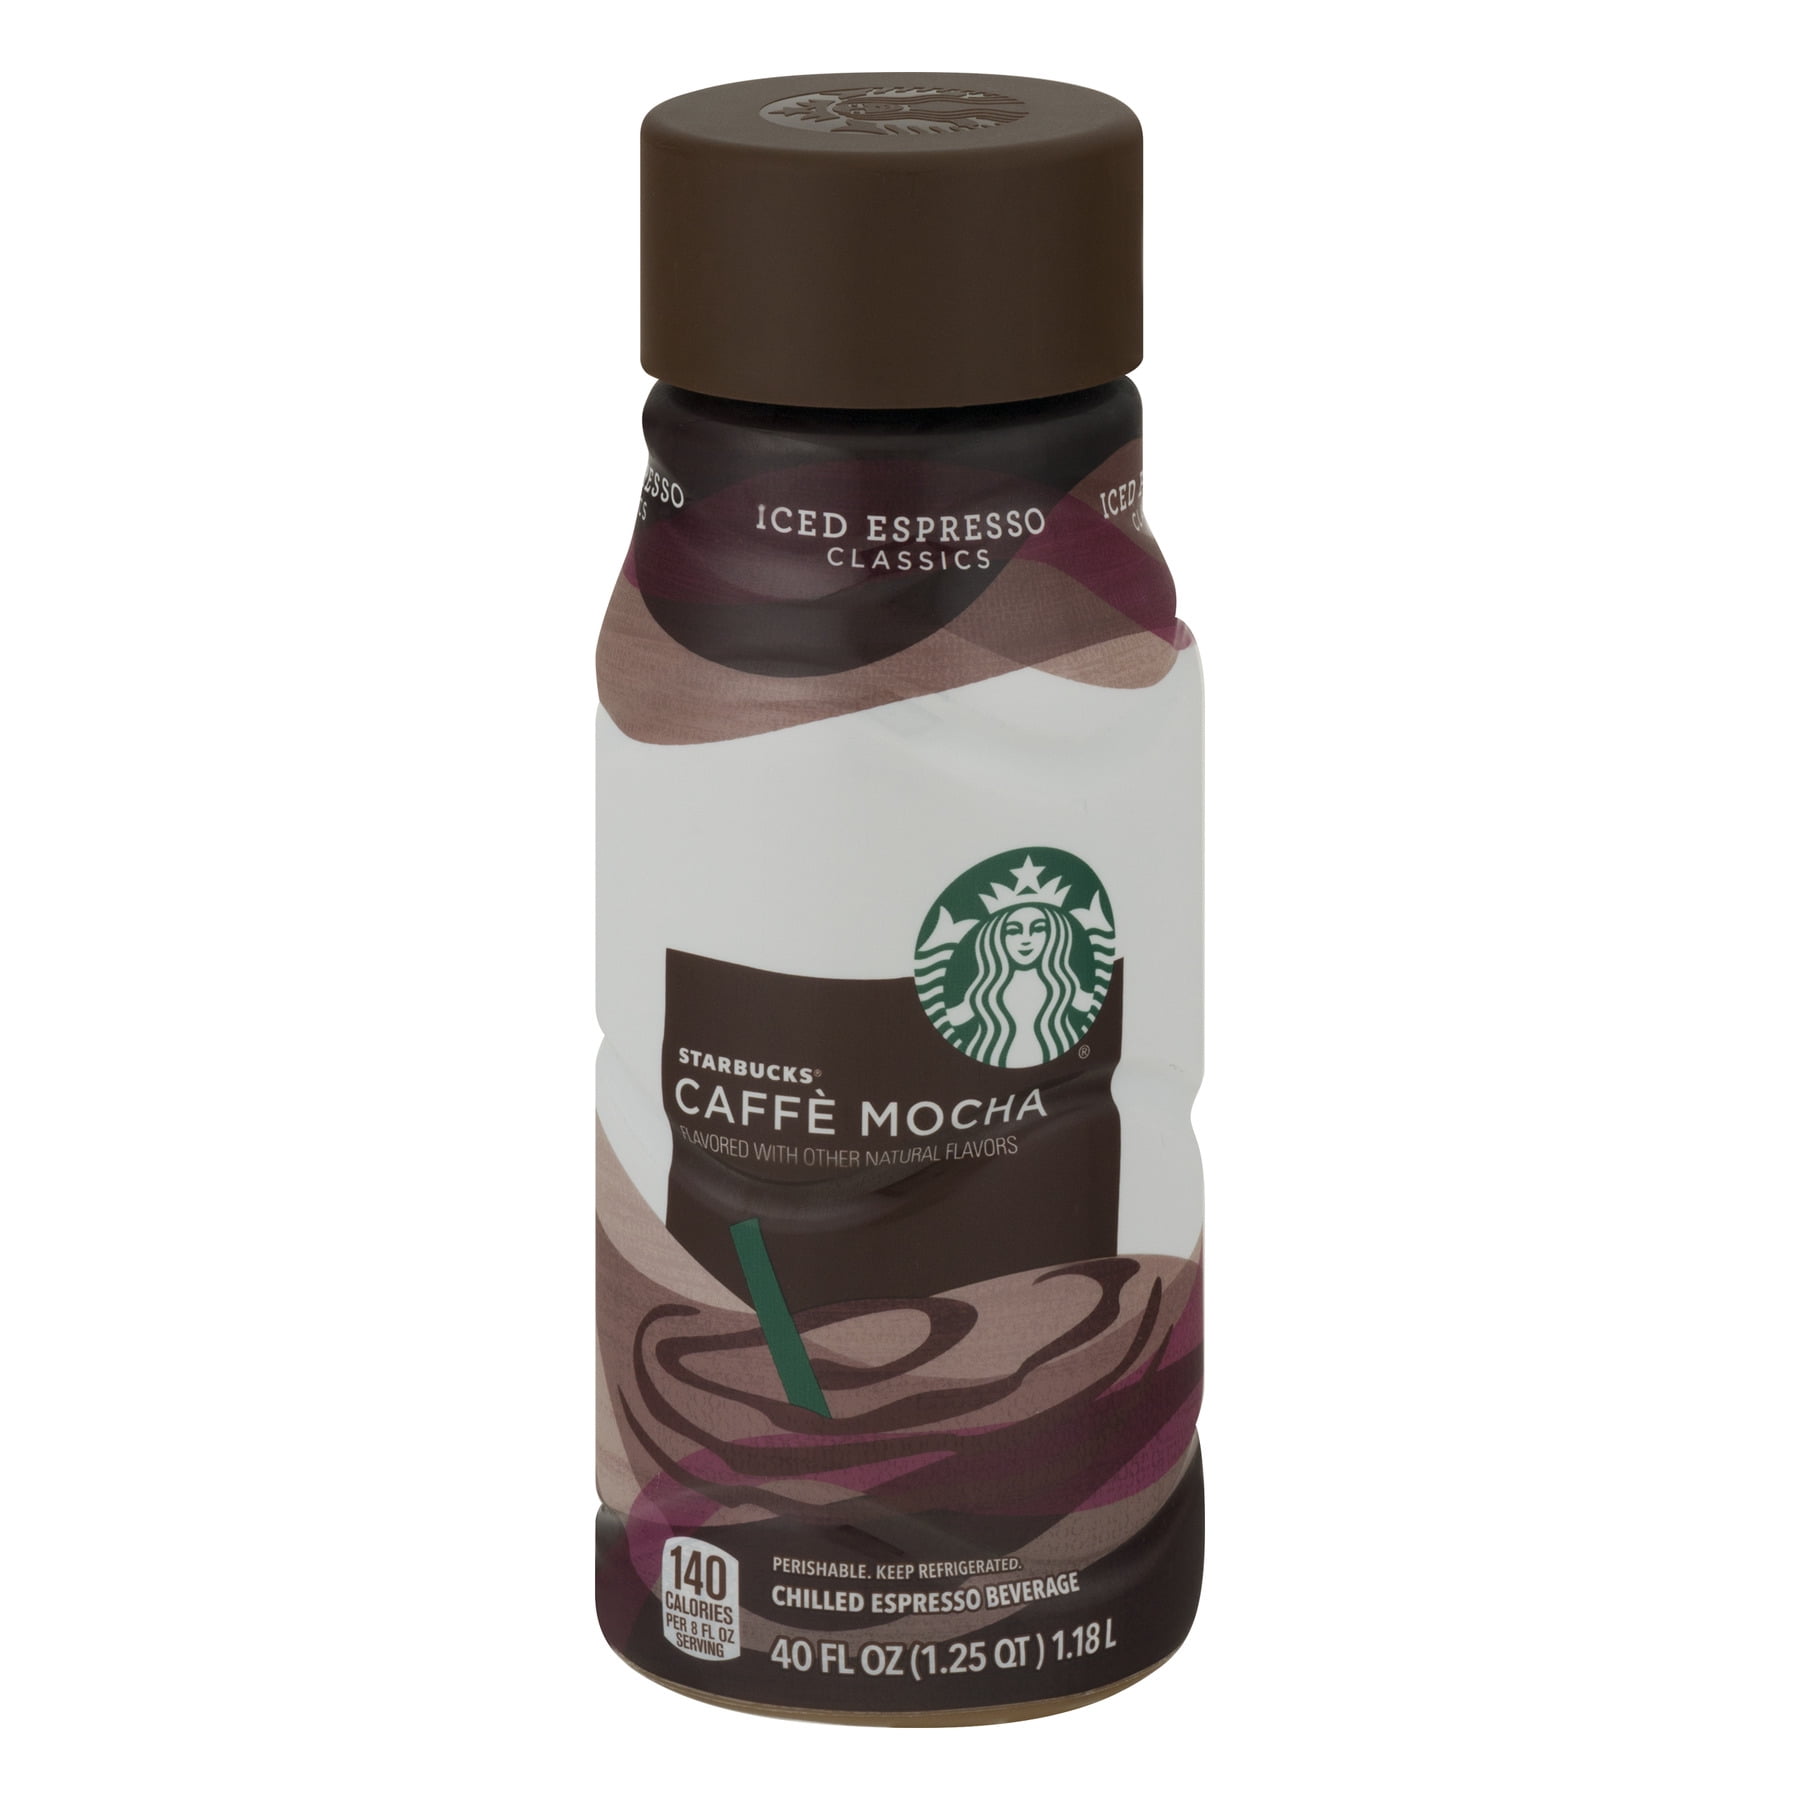 image 0 of Starbucks Iced Espresso Caffe Mocha Premium Iced Coffee Drink, 40 oz Bottle